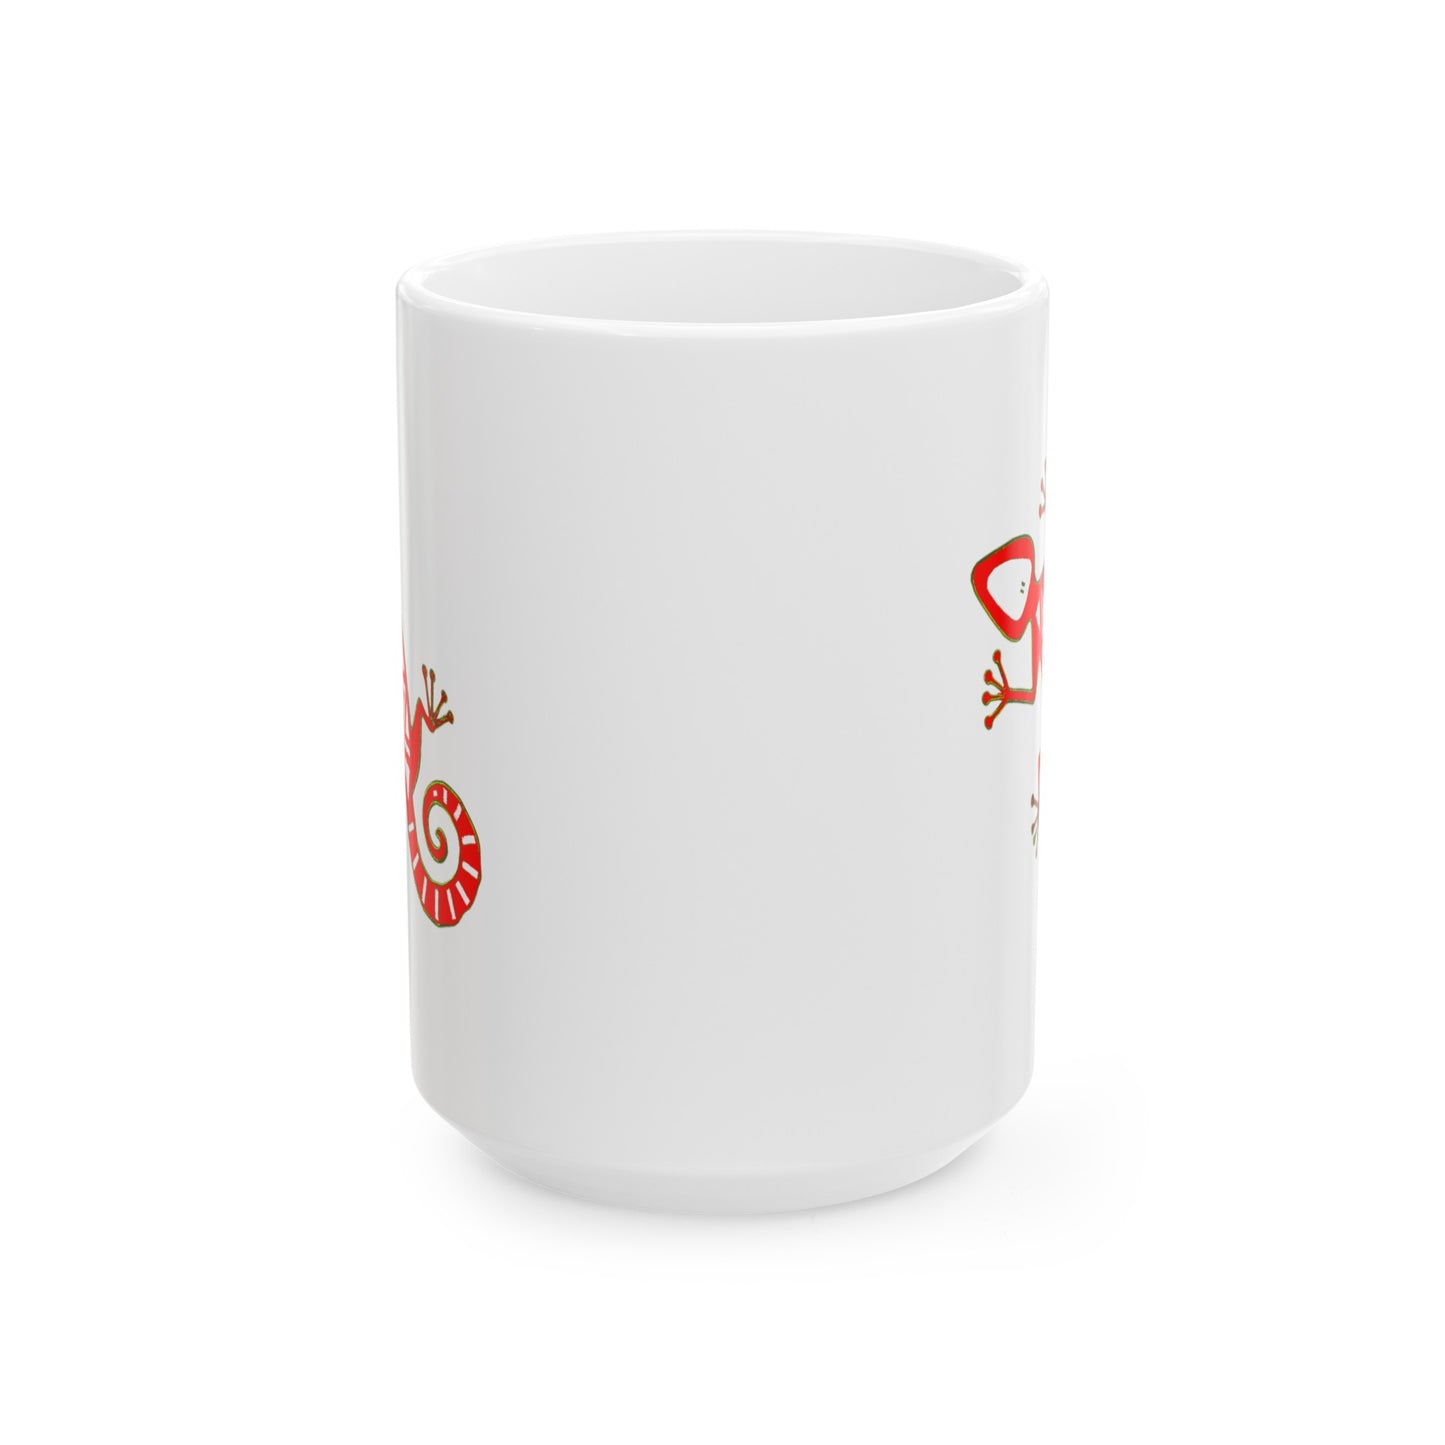 Gecko Coffee Mug - Double Sided White Ceramic 15oz by TheGlassyLass.com